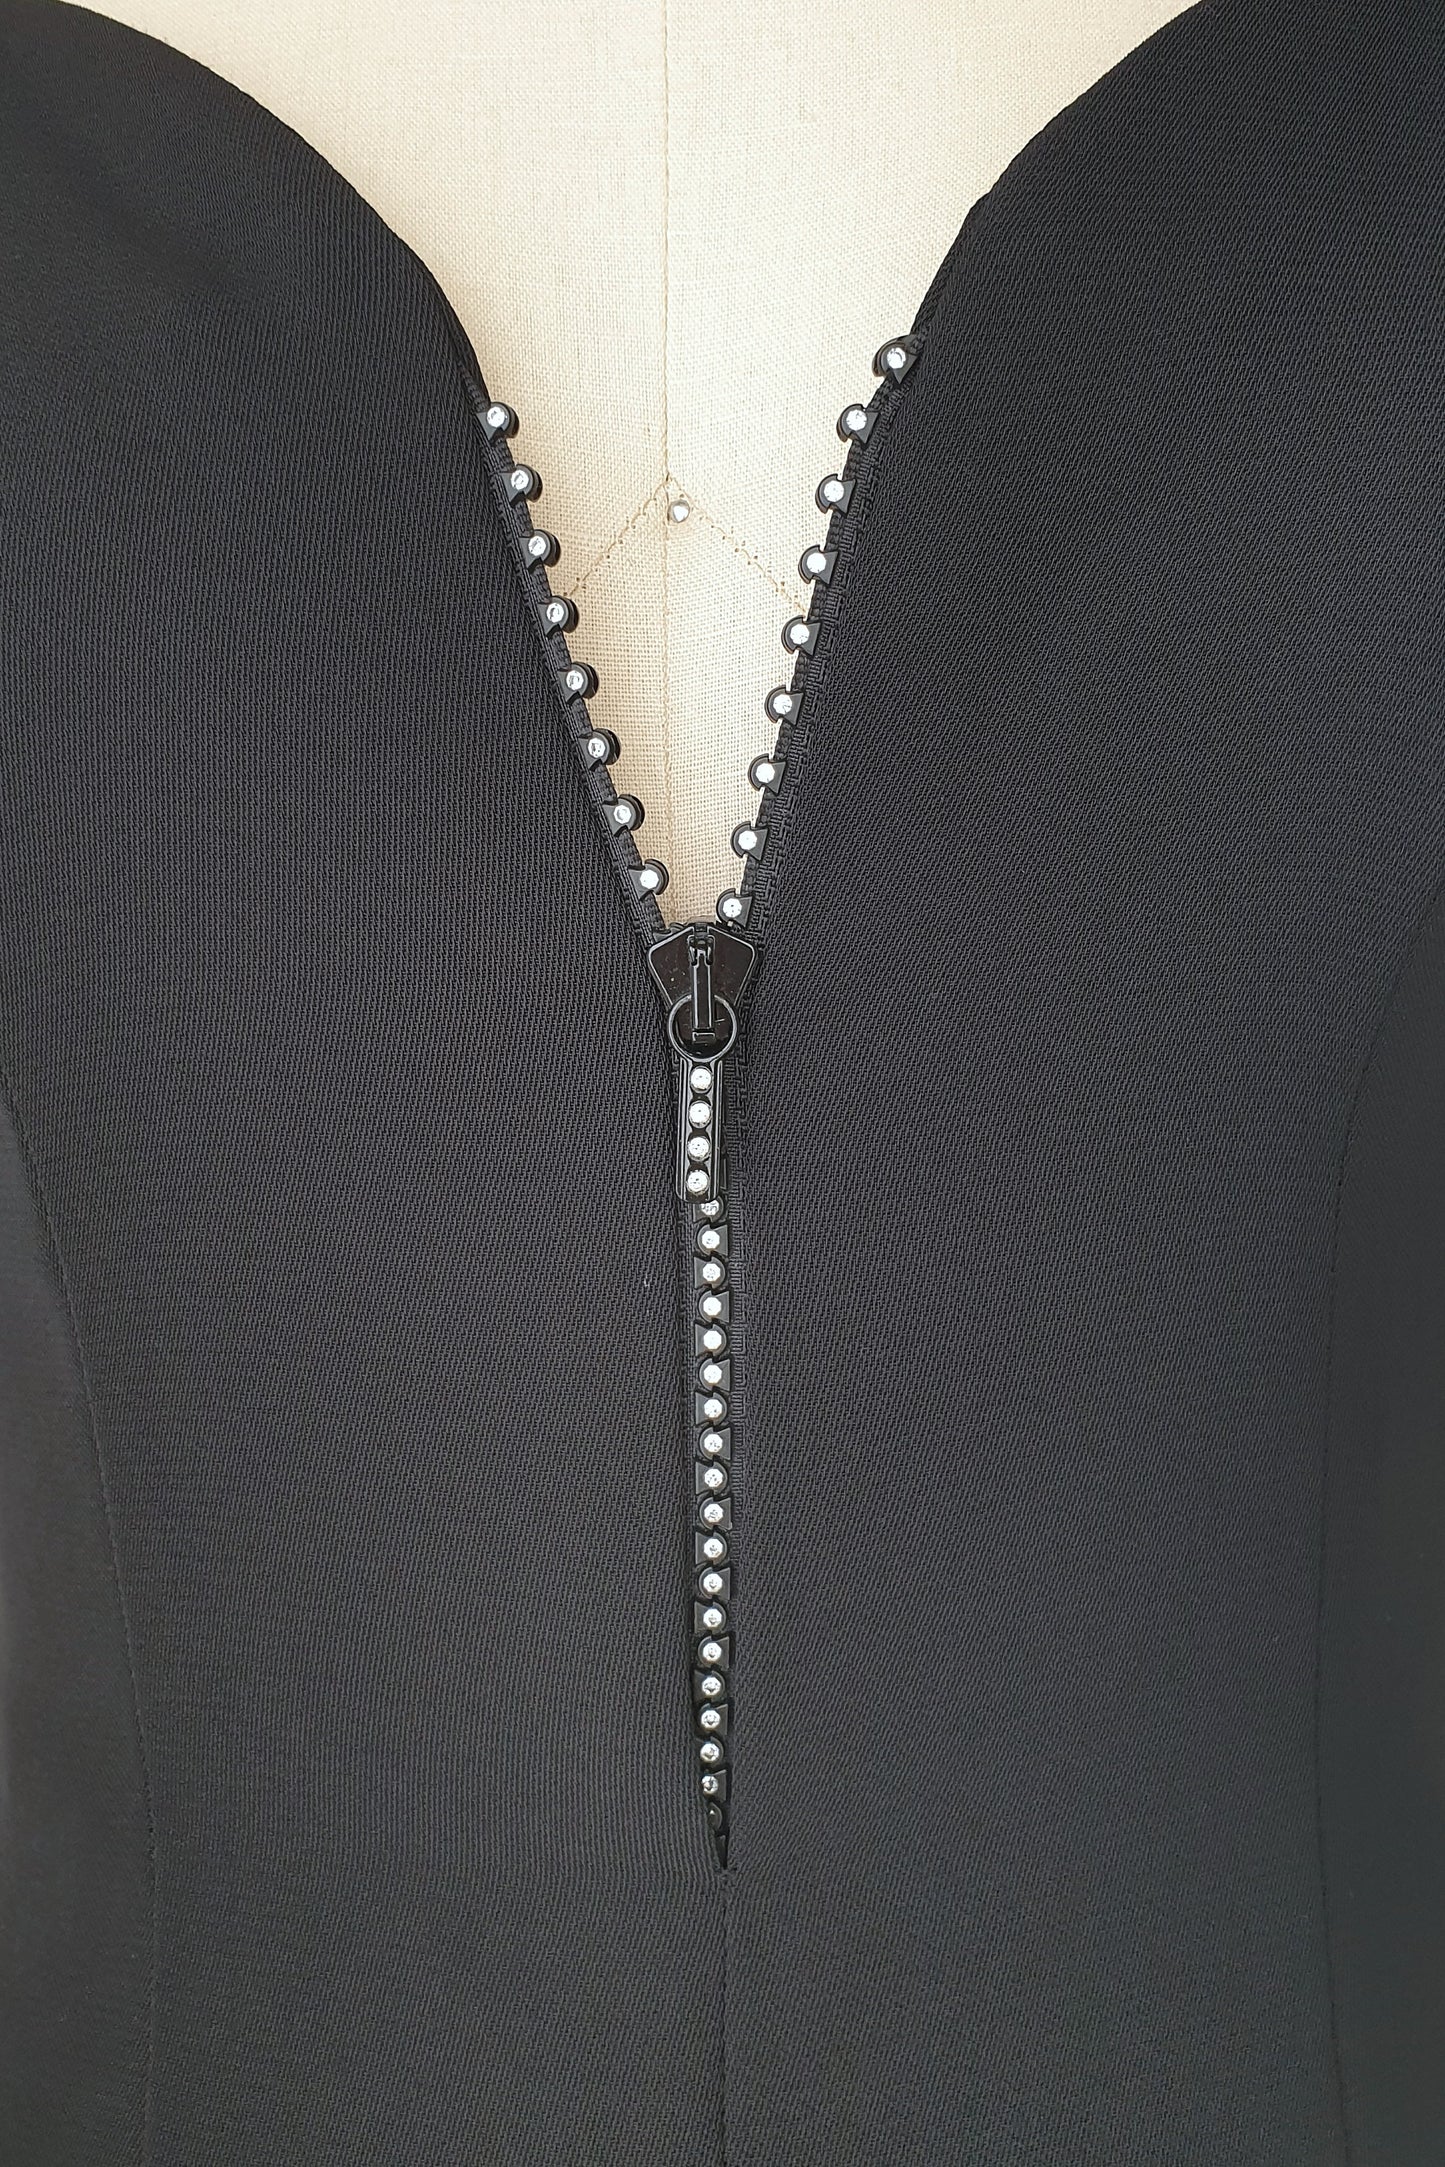 Glamorous black vintage 90's black minimalist dress Size S